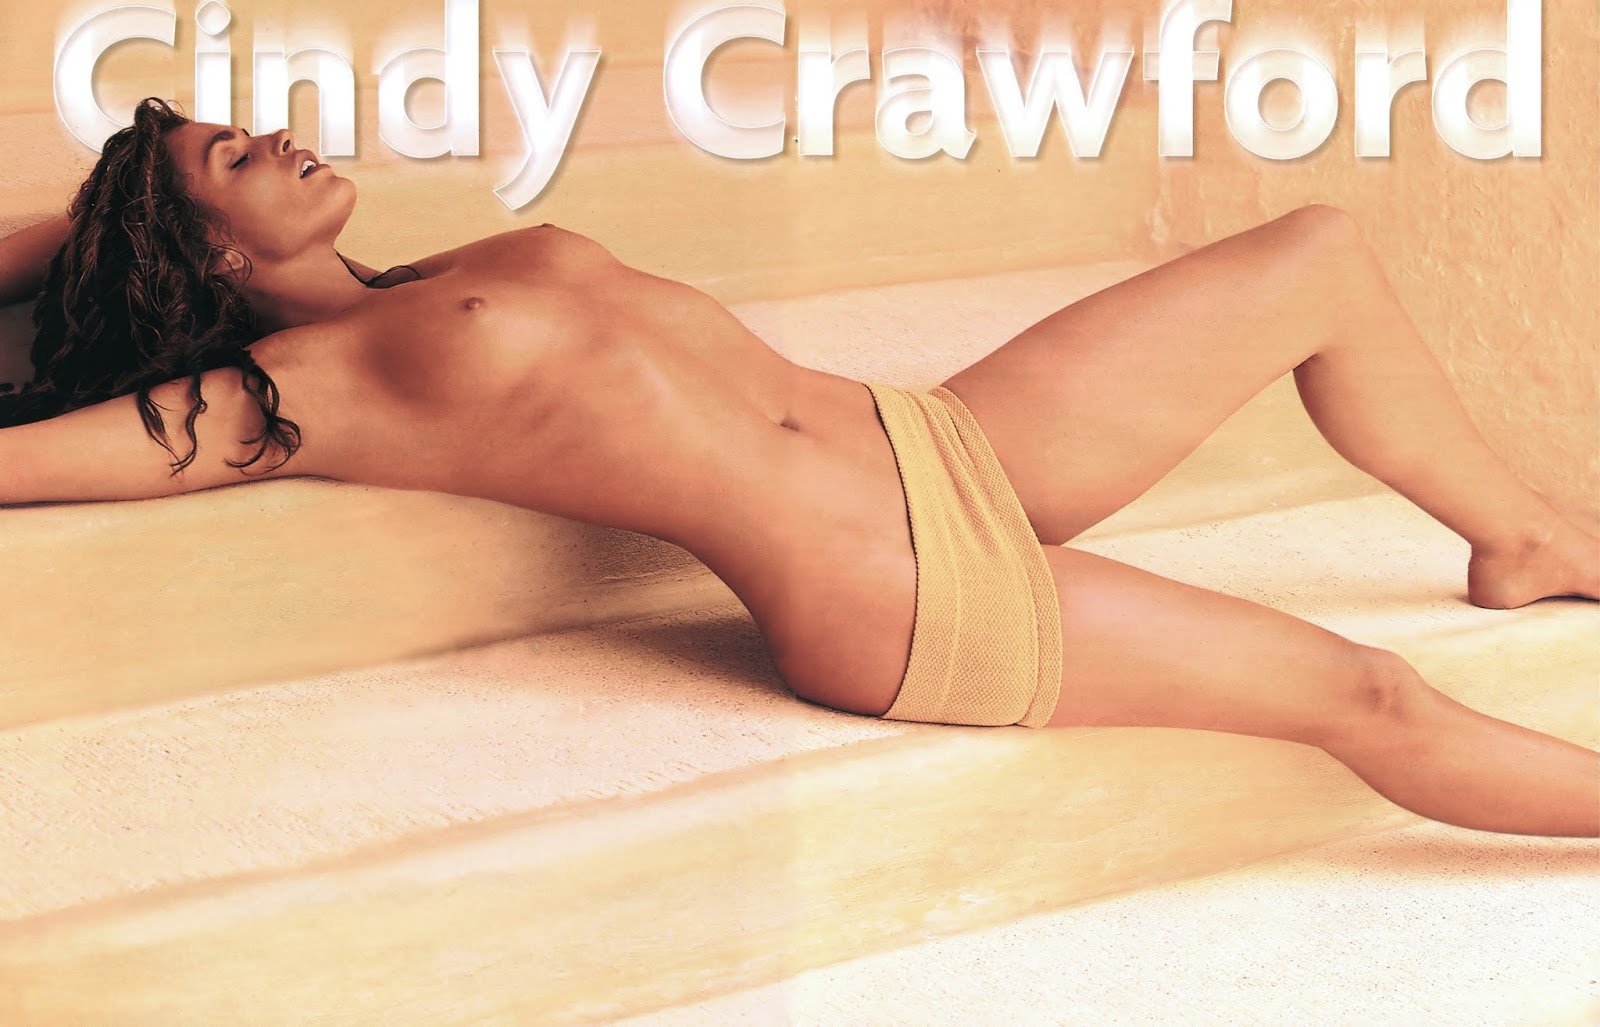 cindy crawford nude playboy pics cindy crawford playboy nude